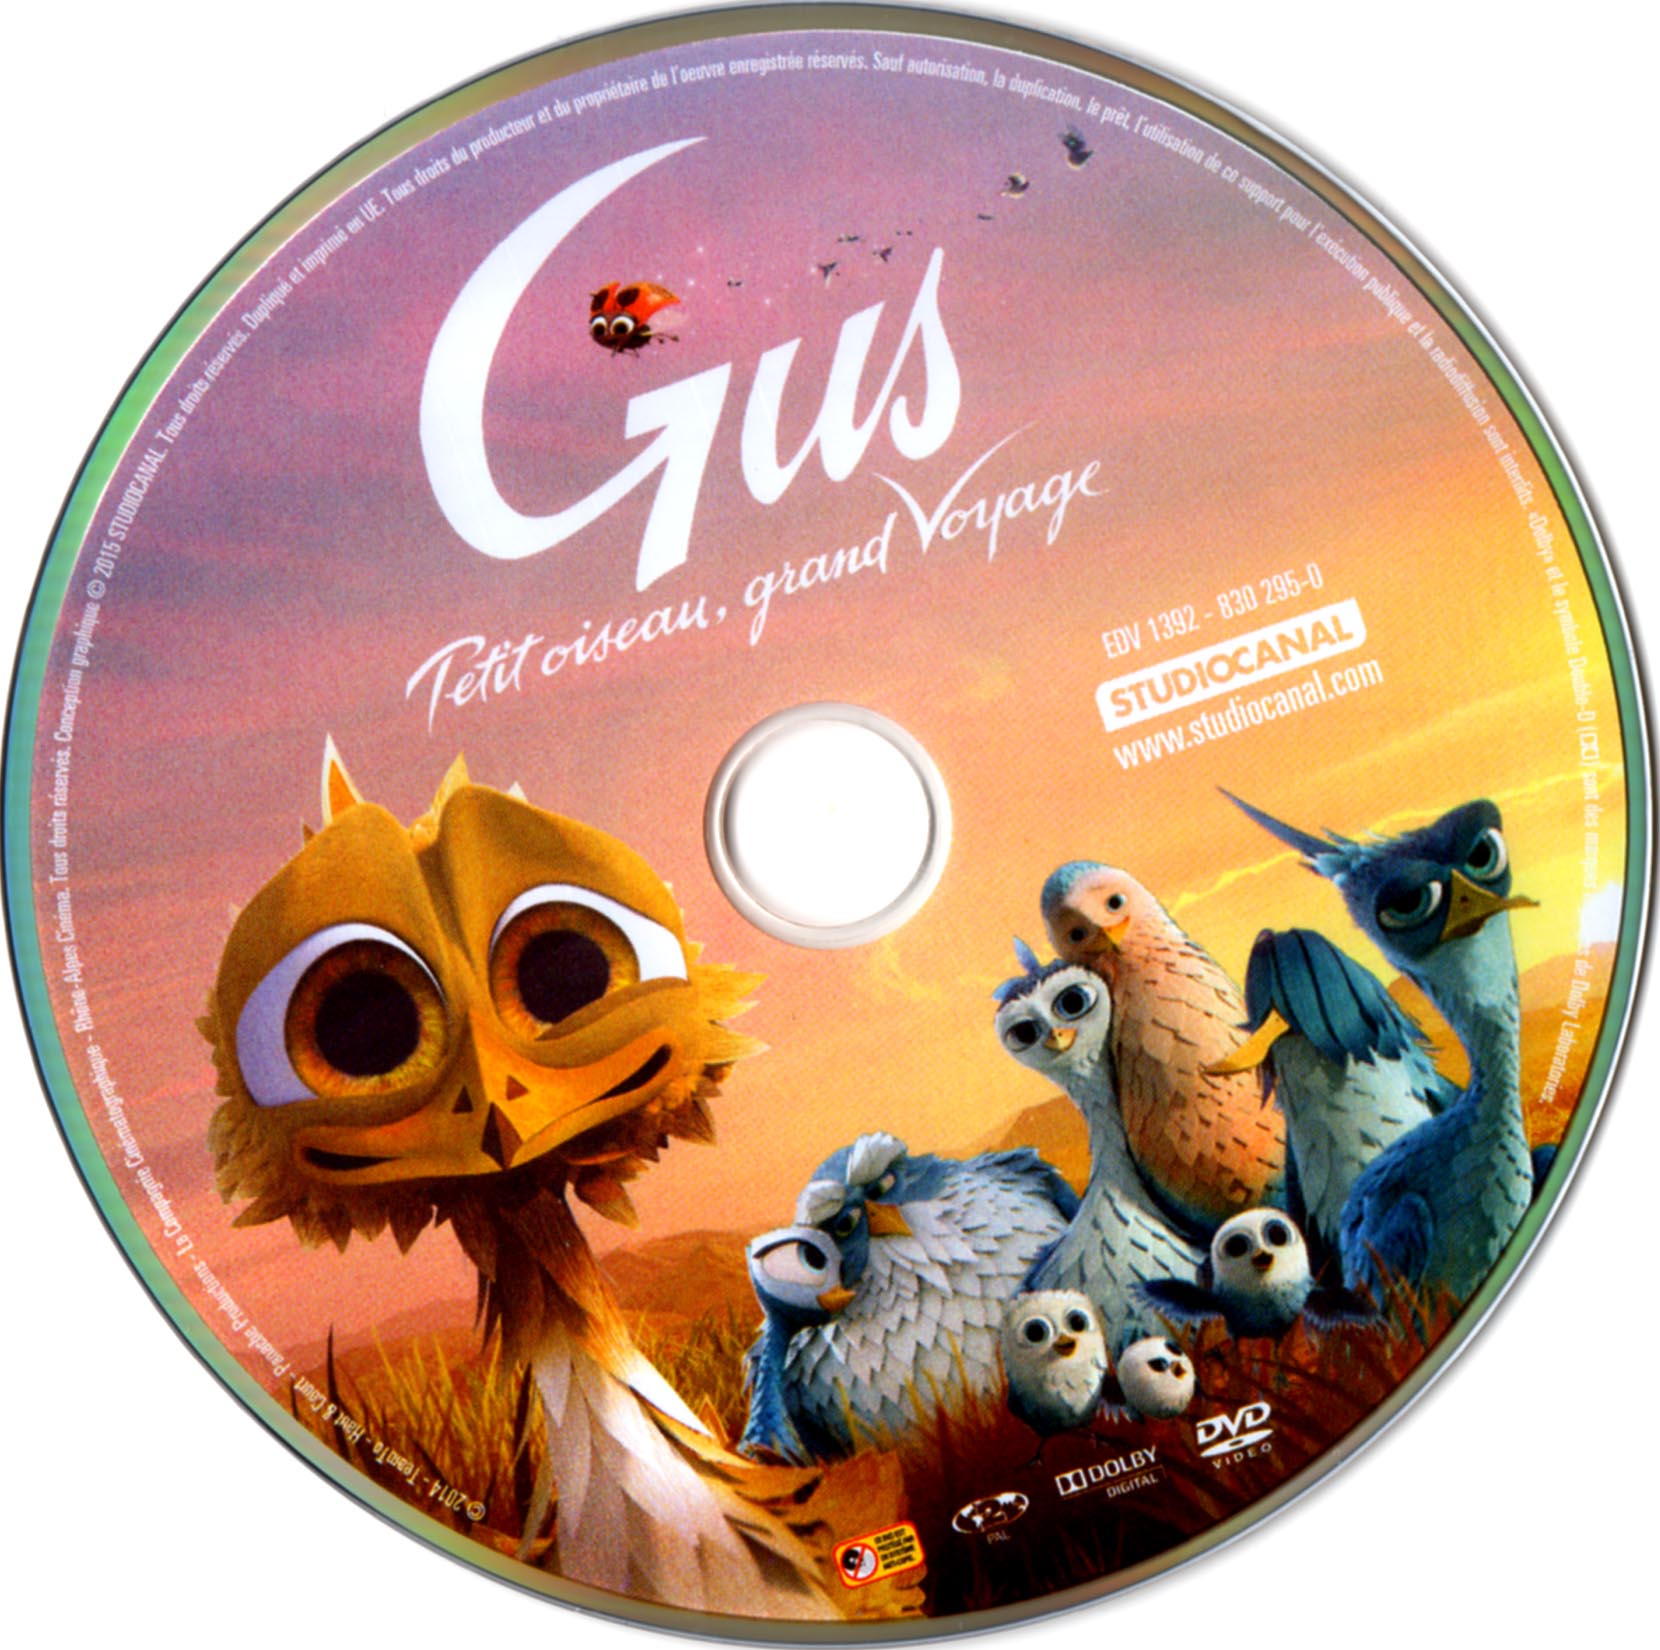 Gus petit oiseau, grand voyage